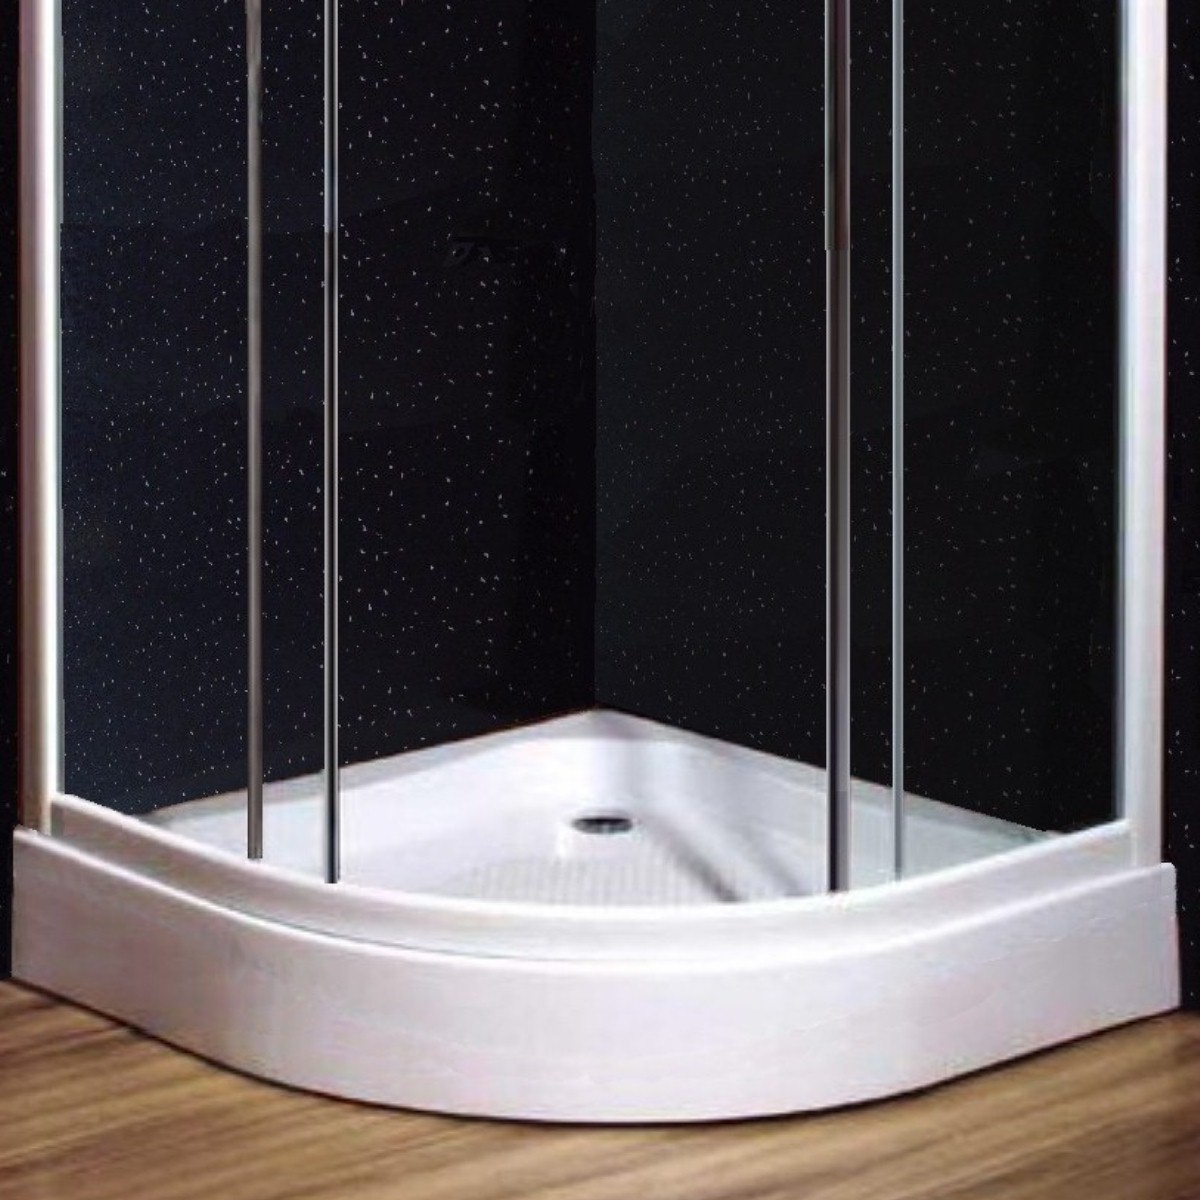 shower panel sparkle effect - Sparkle Effect Shower Panels